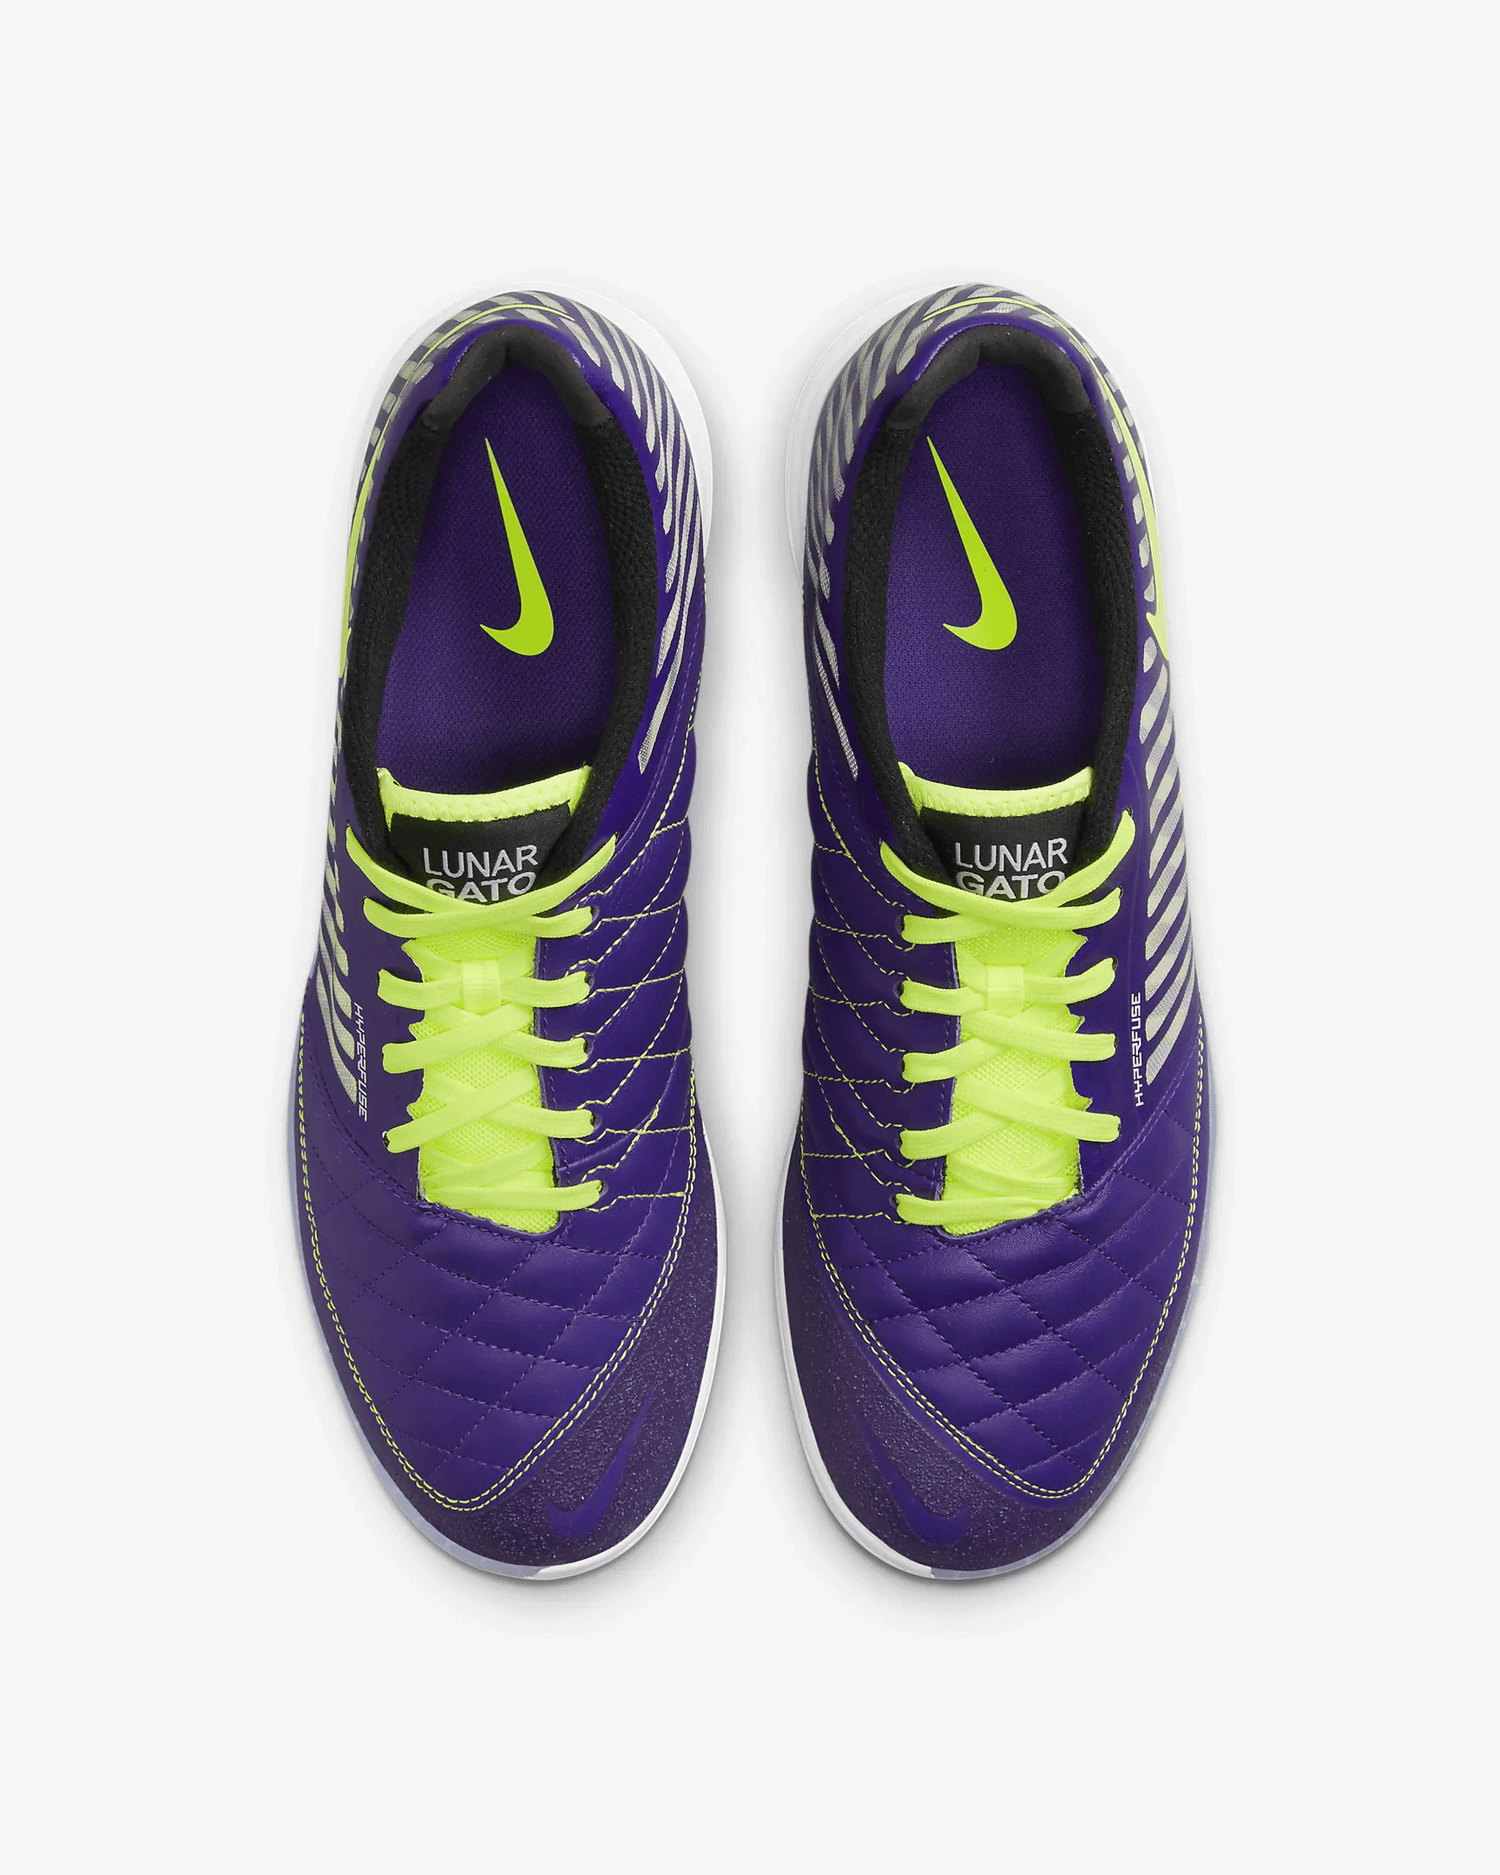 Nike Lunar Gato II Indoor - Purple-Volt (Pair - Top)